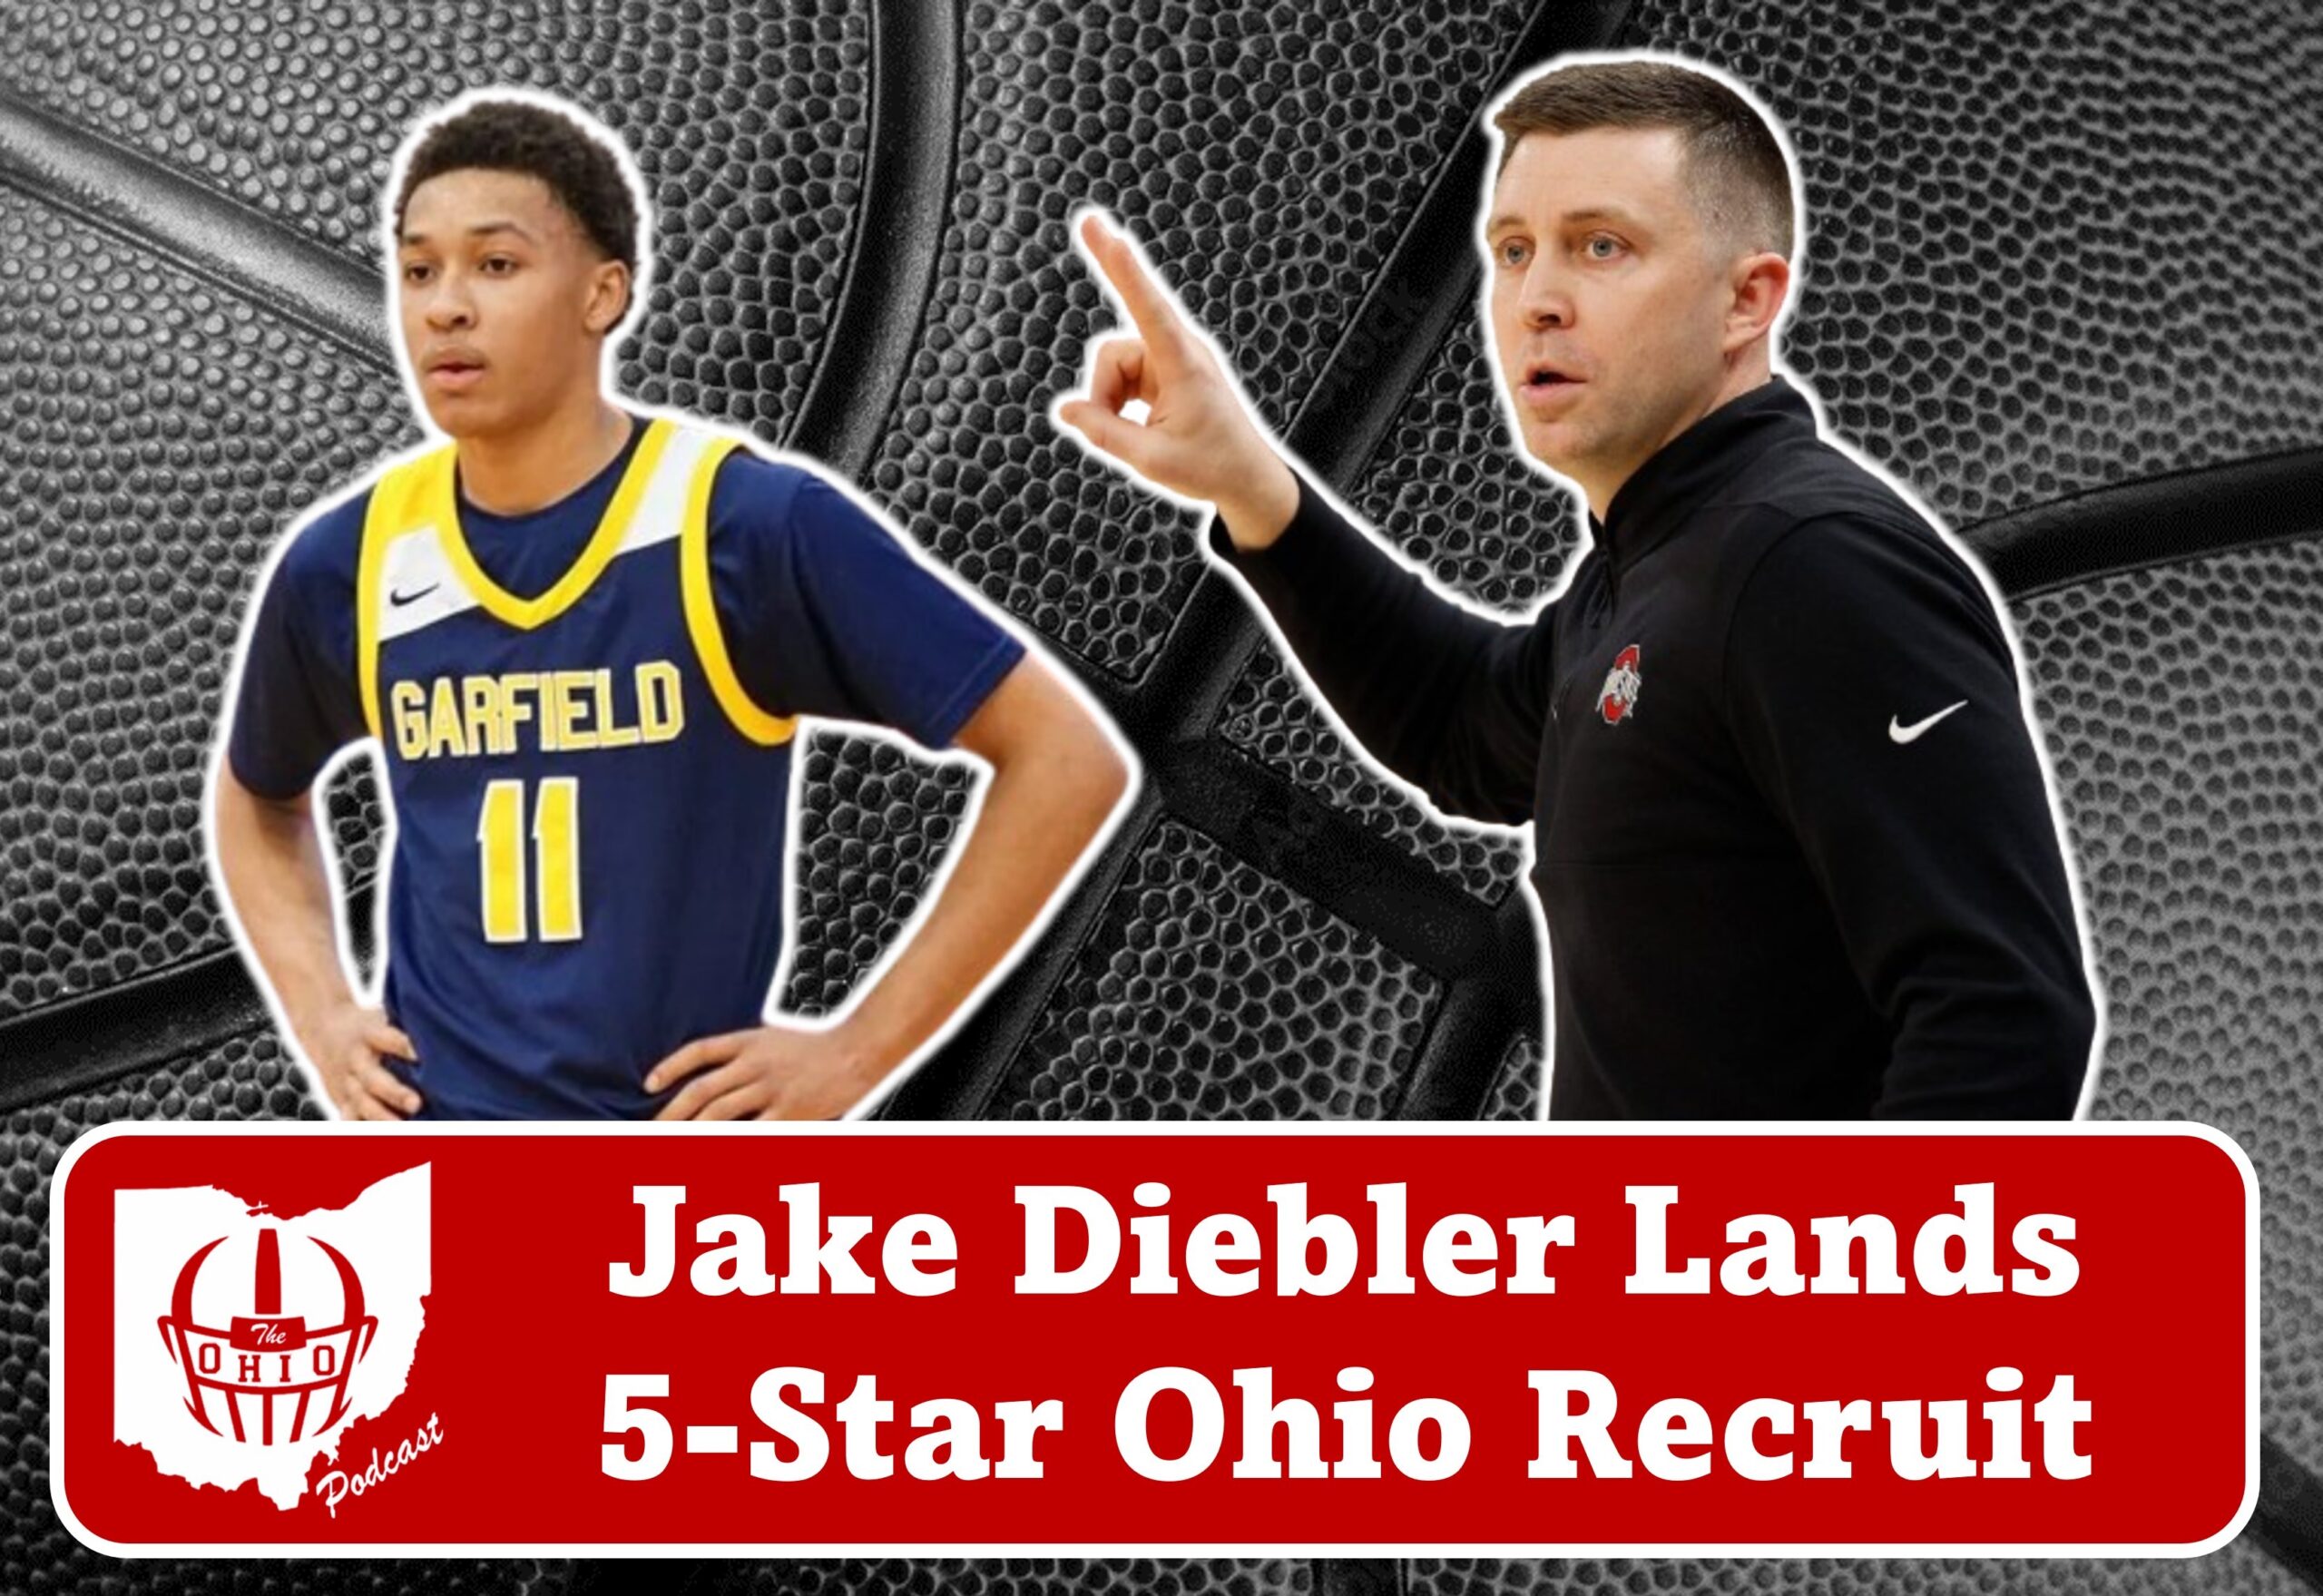 Jake Dieblers Lands 5-Star Ohio Recruit